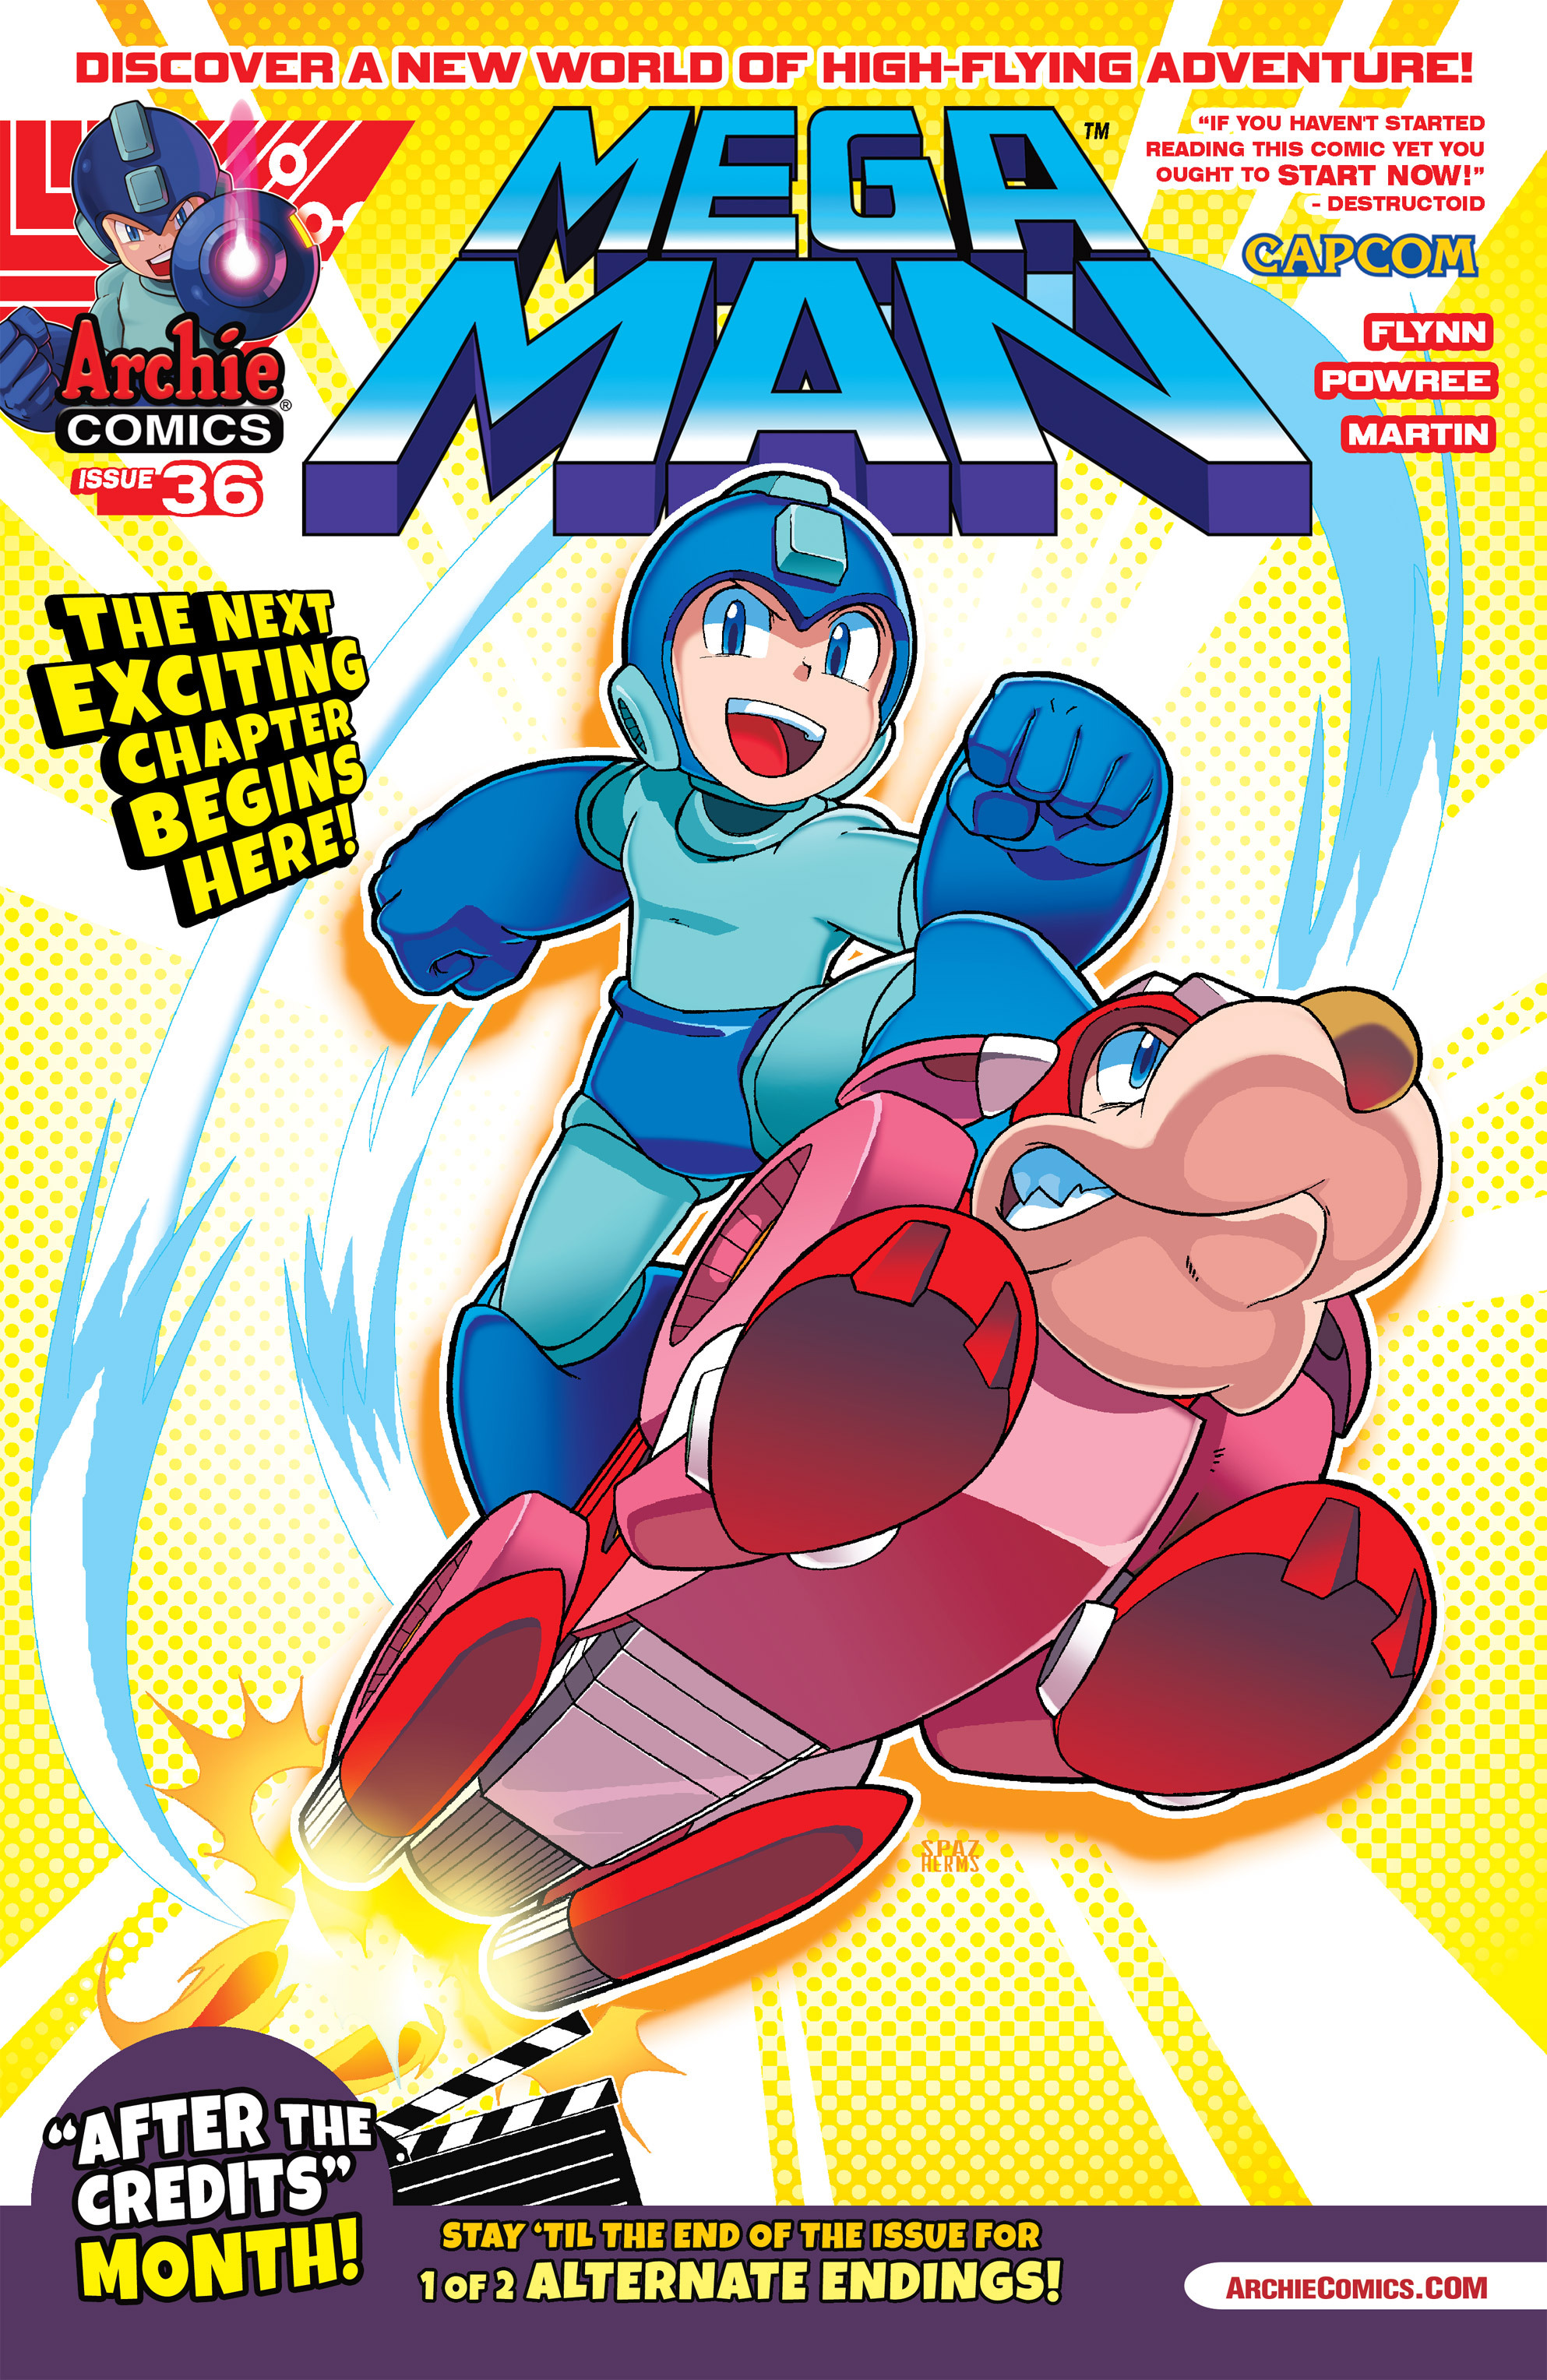 Mega Man Issue 36 (Archie Comics) | MMKB | FANDOM powered ...